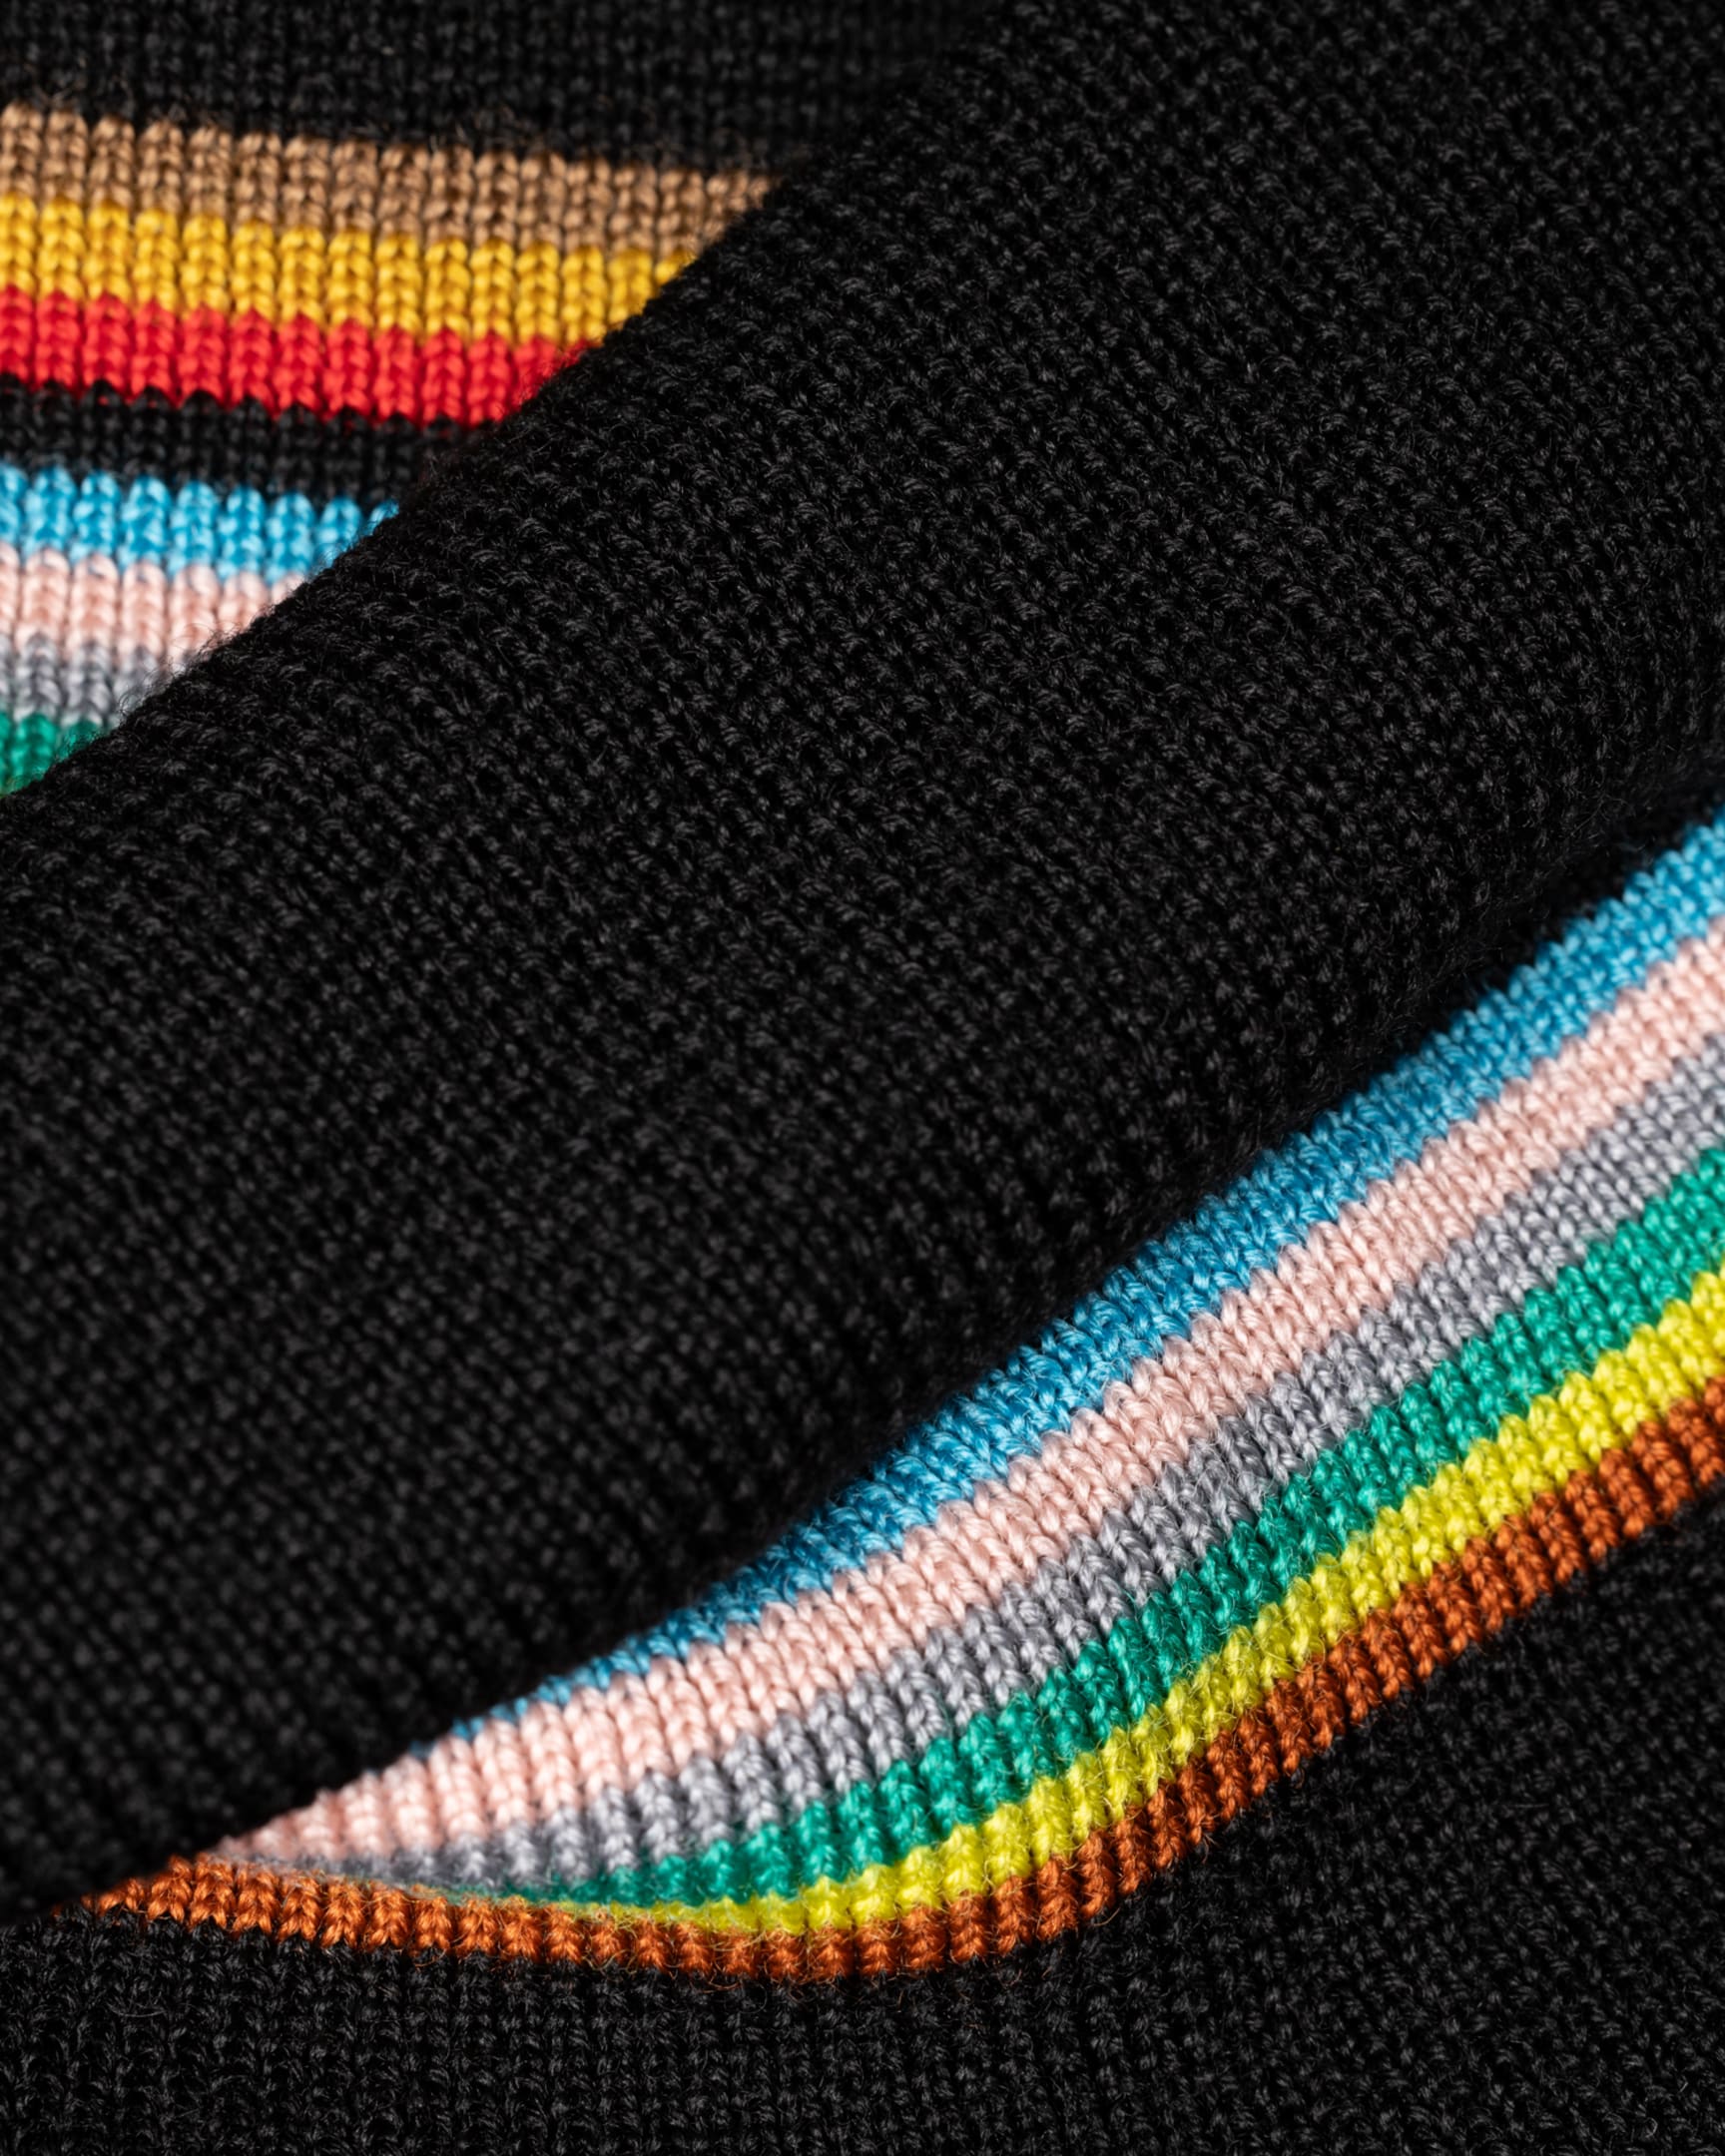 Detail View - Black Merino Wool Roll Neck Sweater Paul Smith